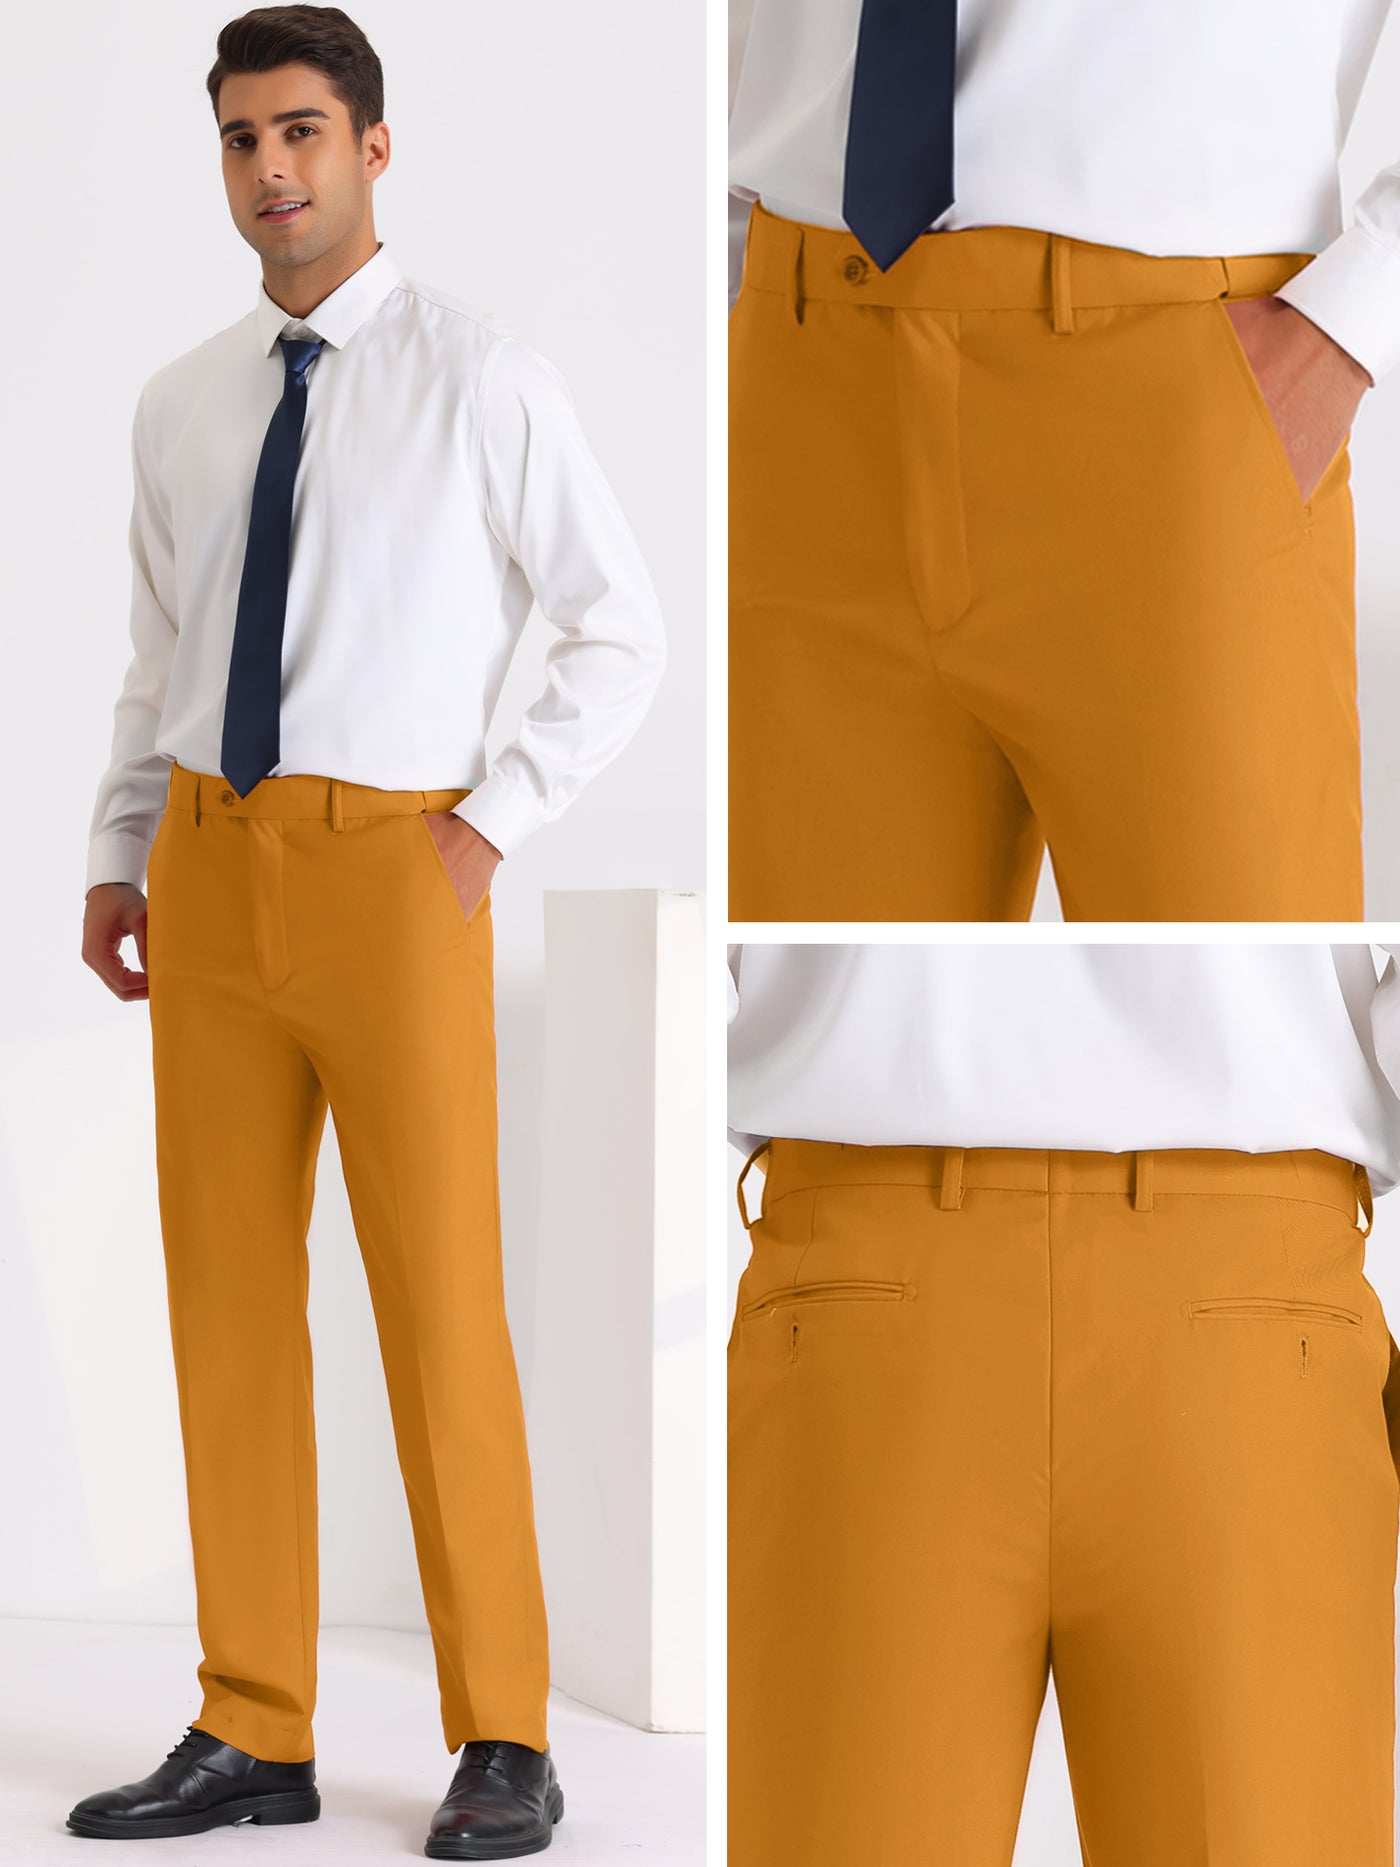 Bublédon Solid Dress Pants for Men's Business Button Closure Flat Front Formal Trousers